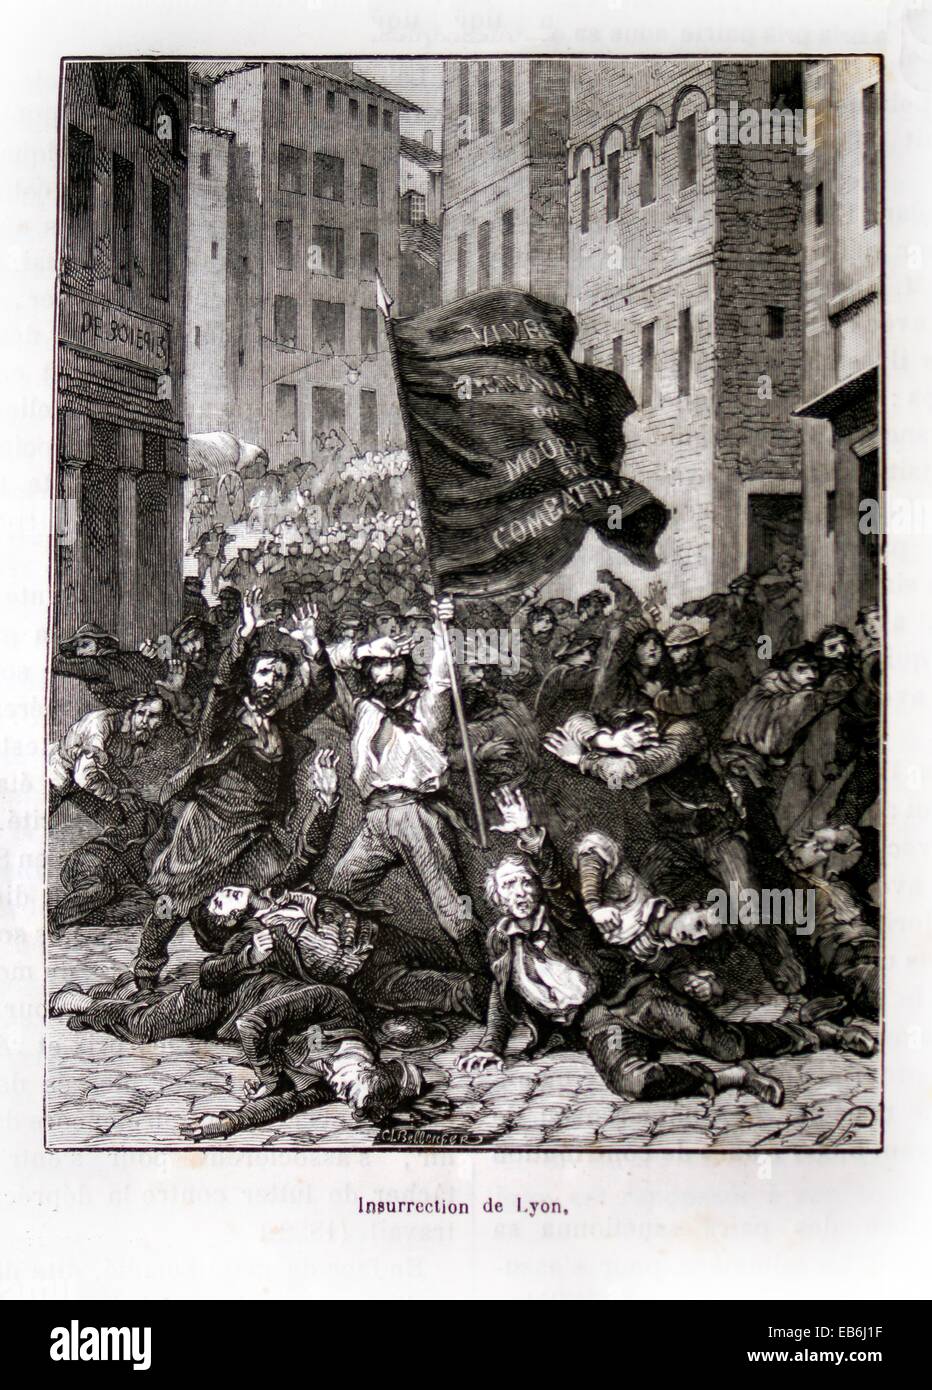 Insurrection in Lyon, France, 19th century Stock Photo